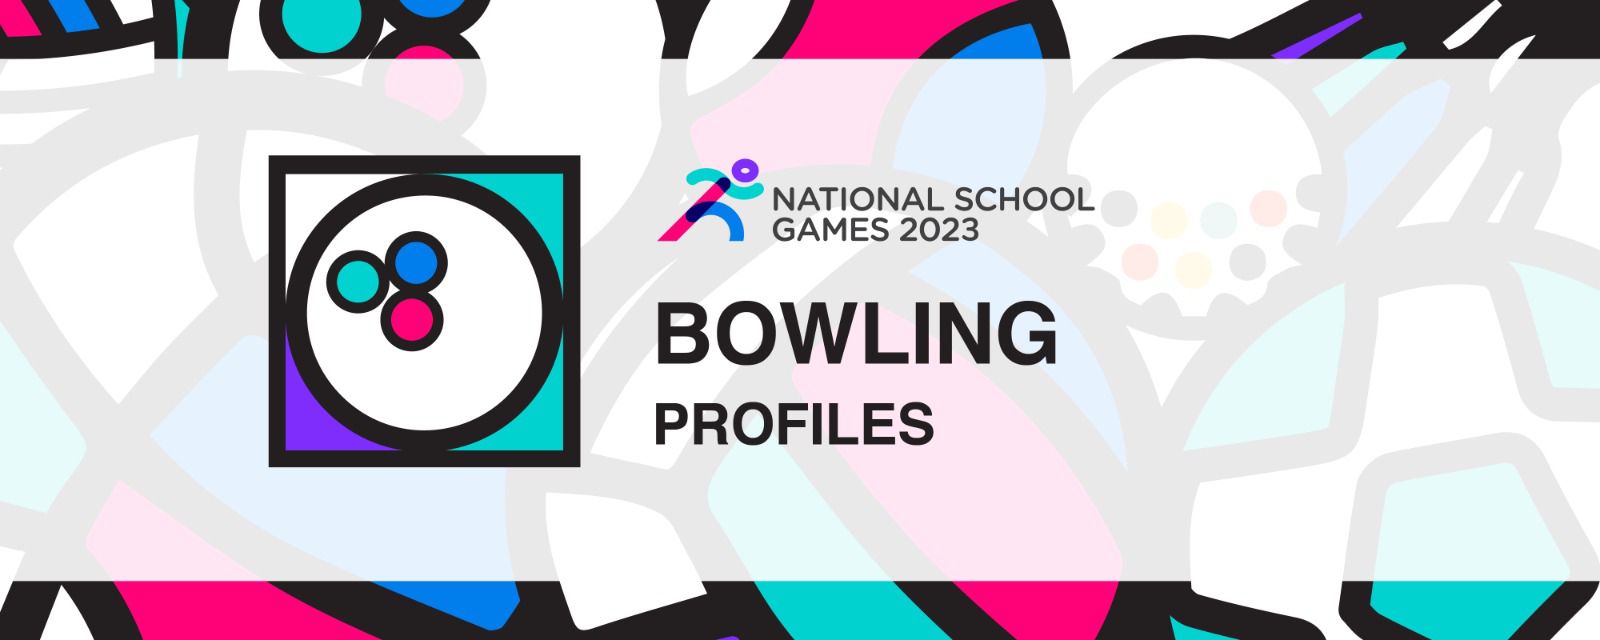 National School Games 2023 | Bowling | Profiles